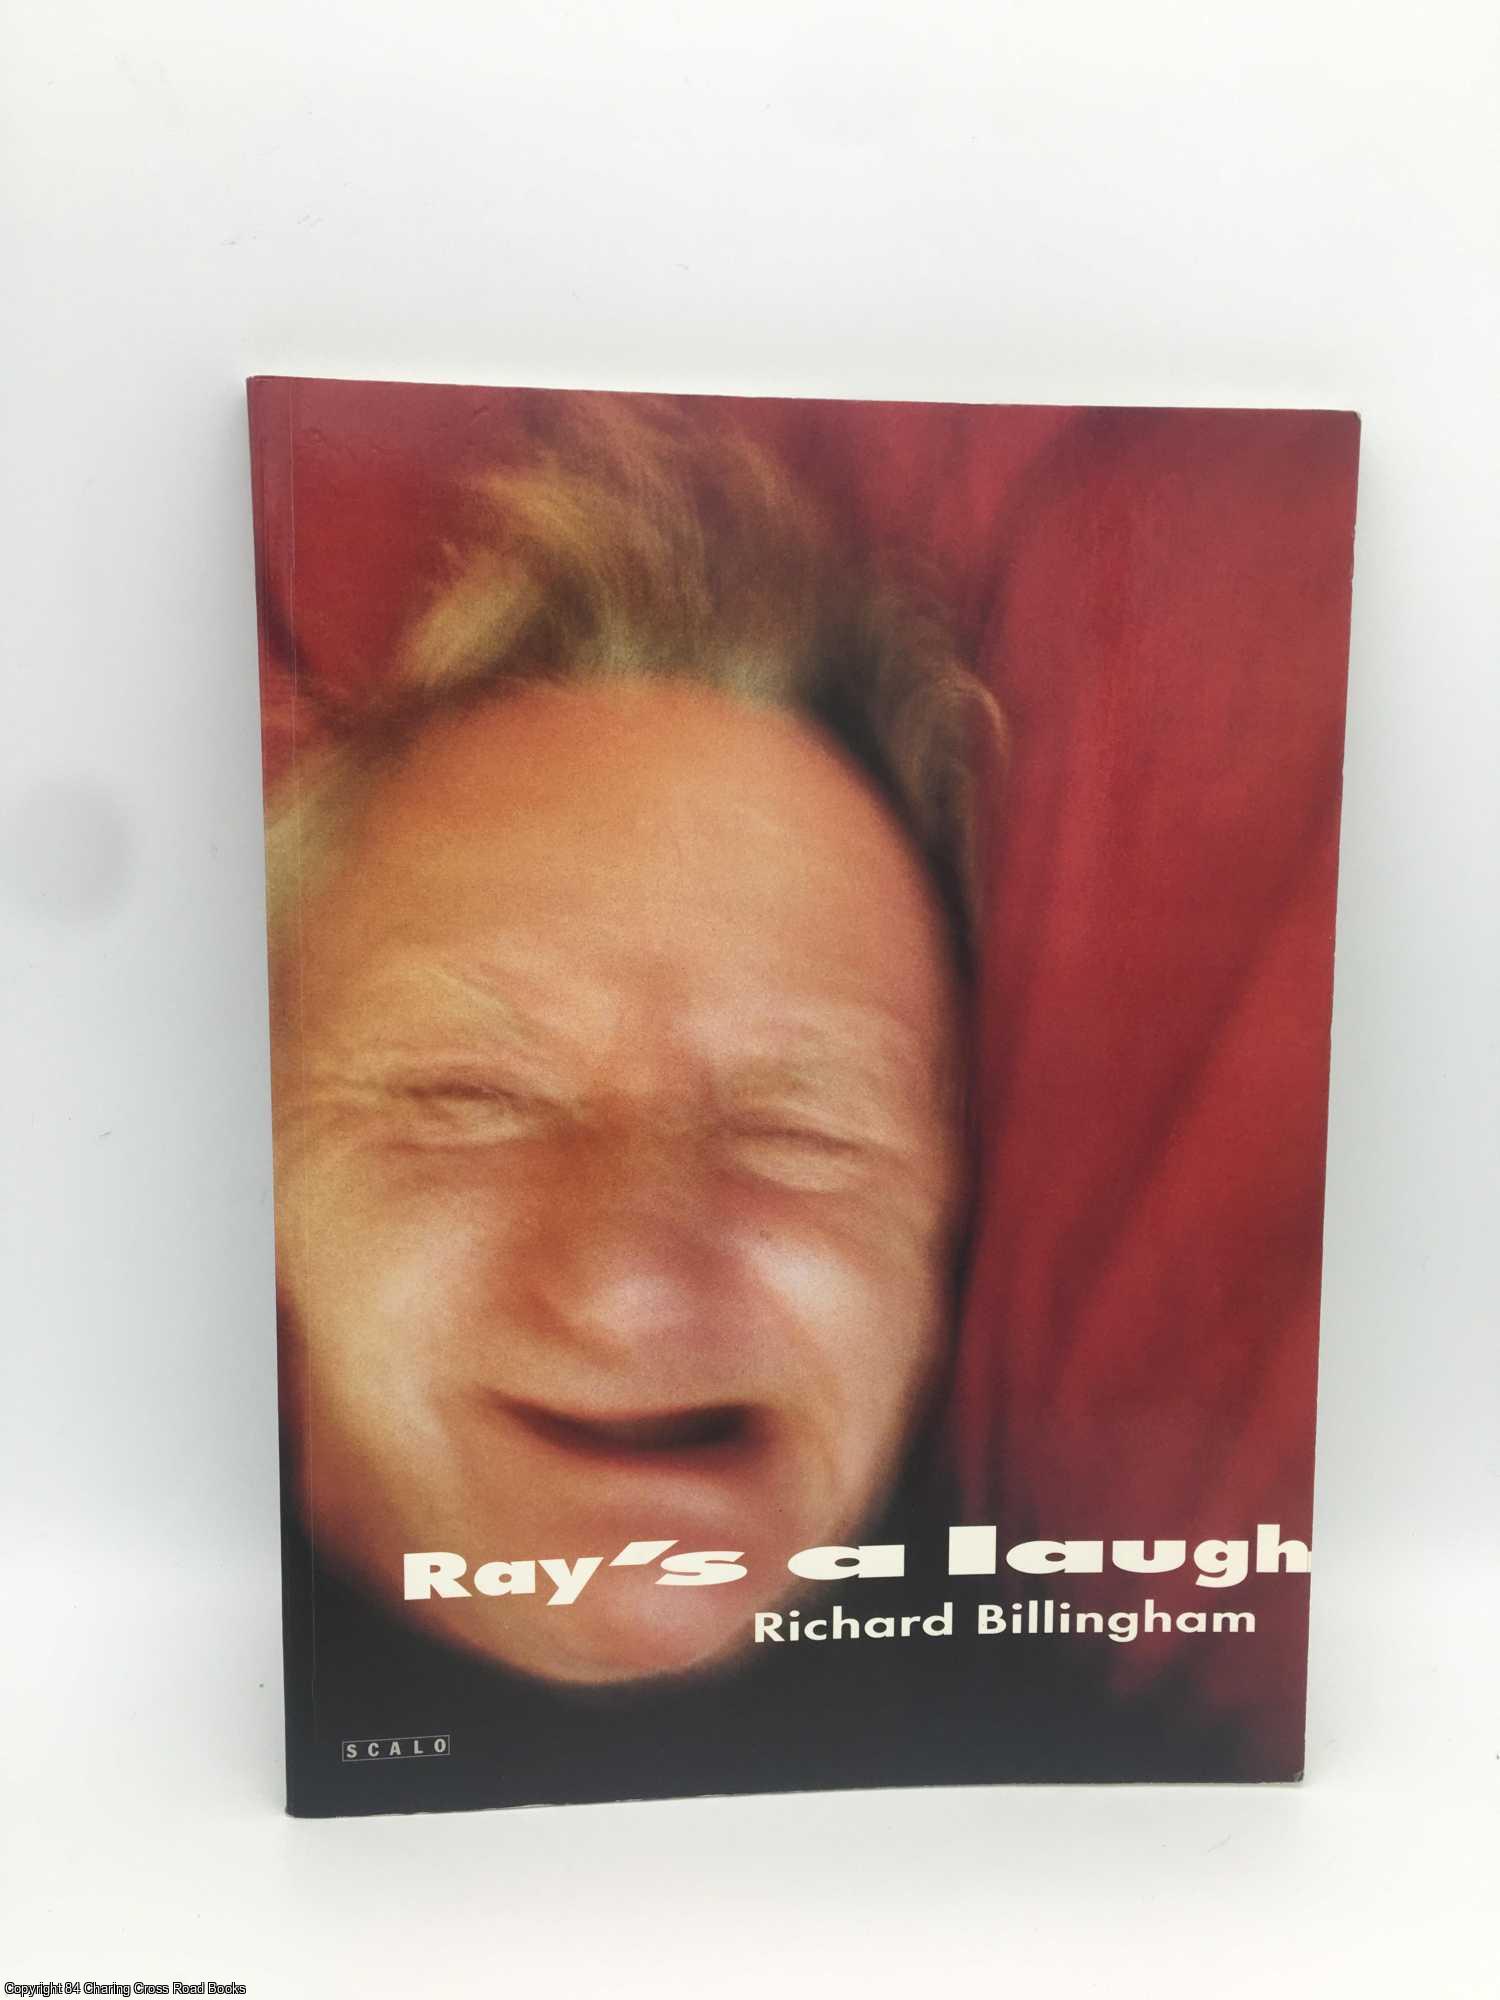 Billingham, Richard - Ray's a Laugh